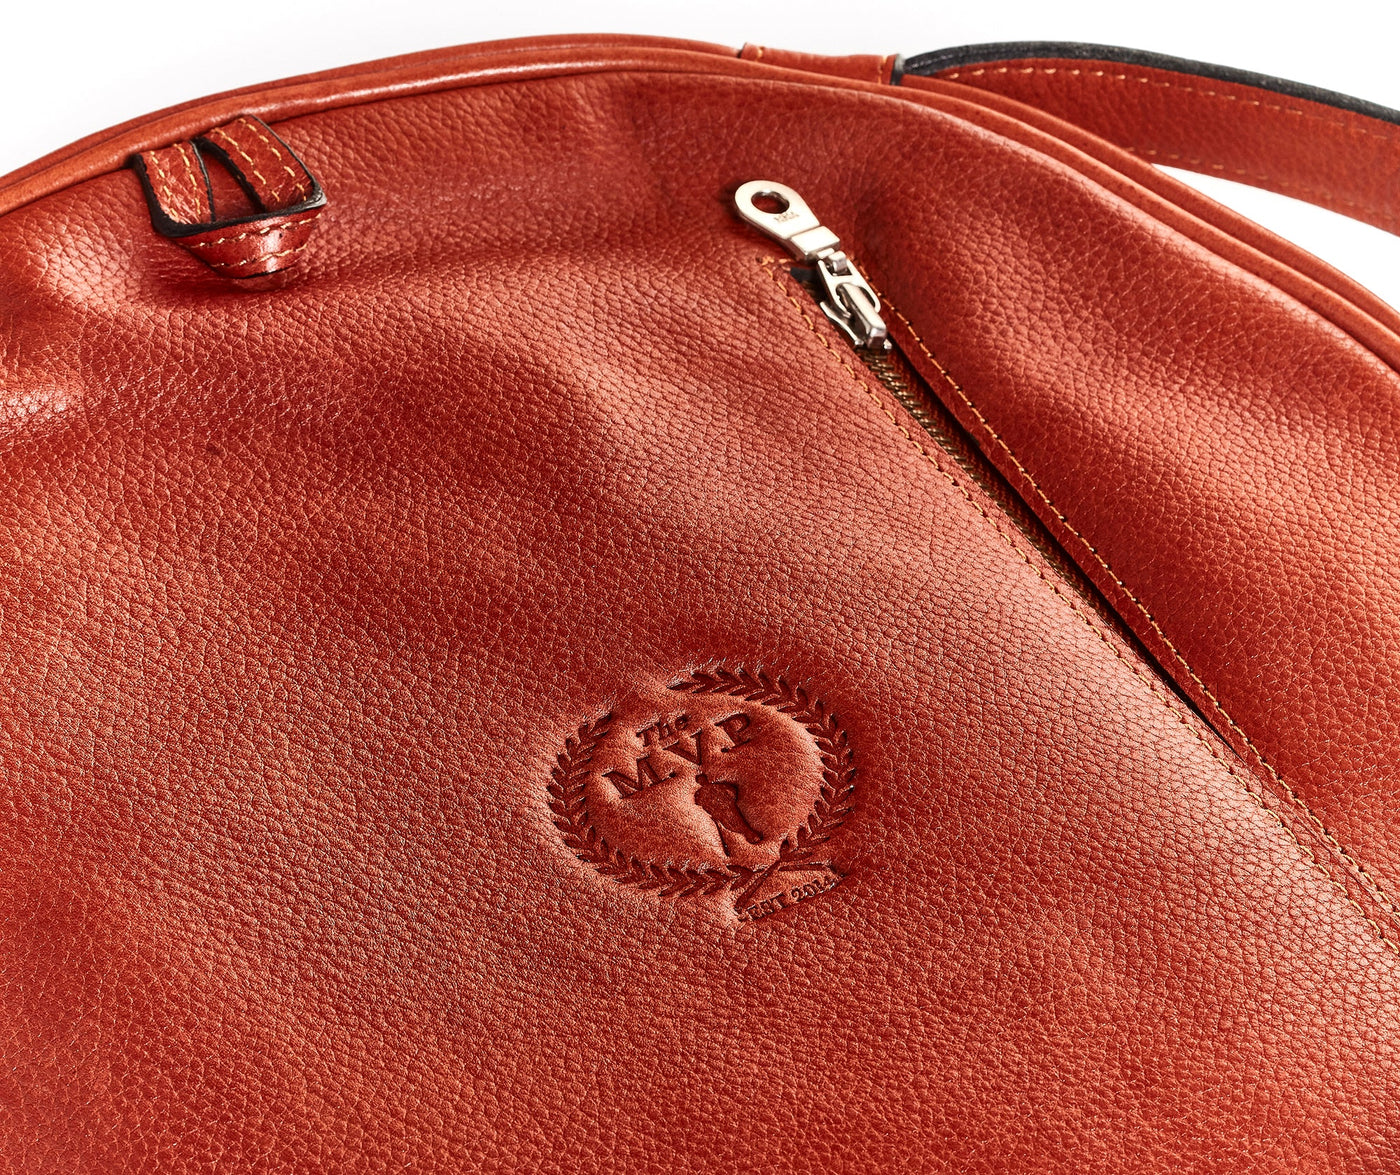 RETRO Heritage Leather Tennis Bag - MODEST VINTAGE PLAYER LTD